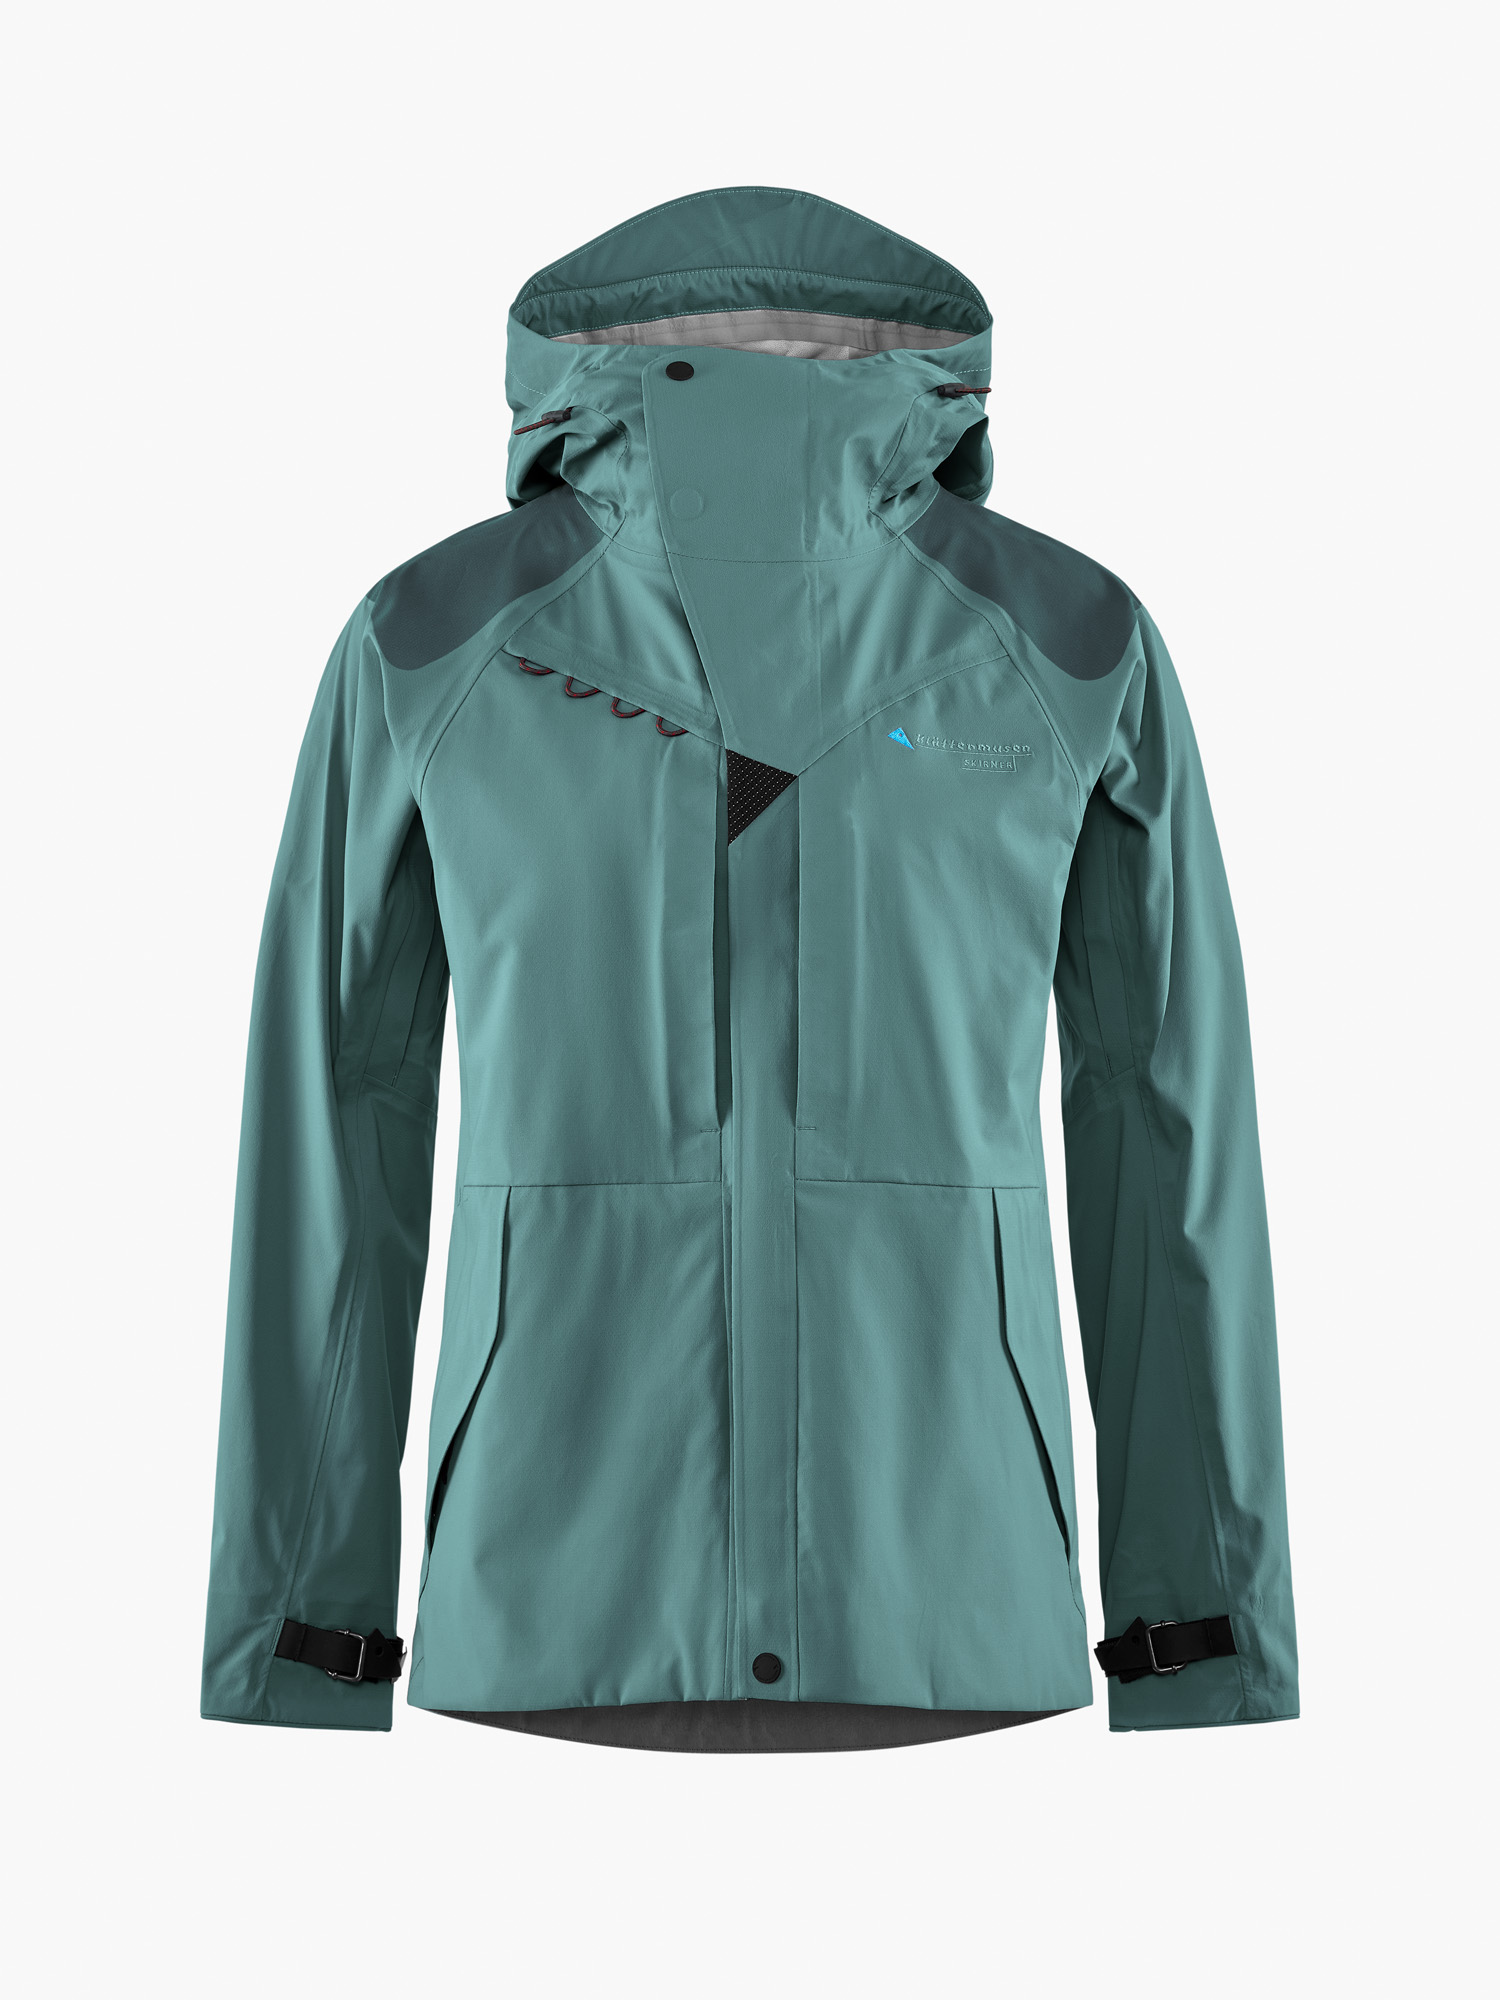 10017 - Skirner Jacket W's - Frost Green